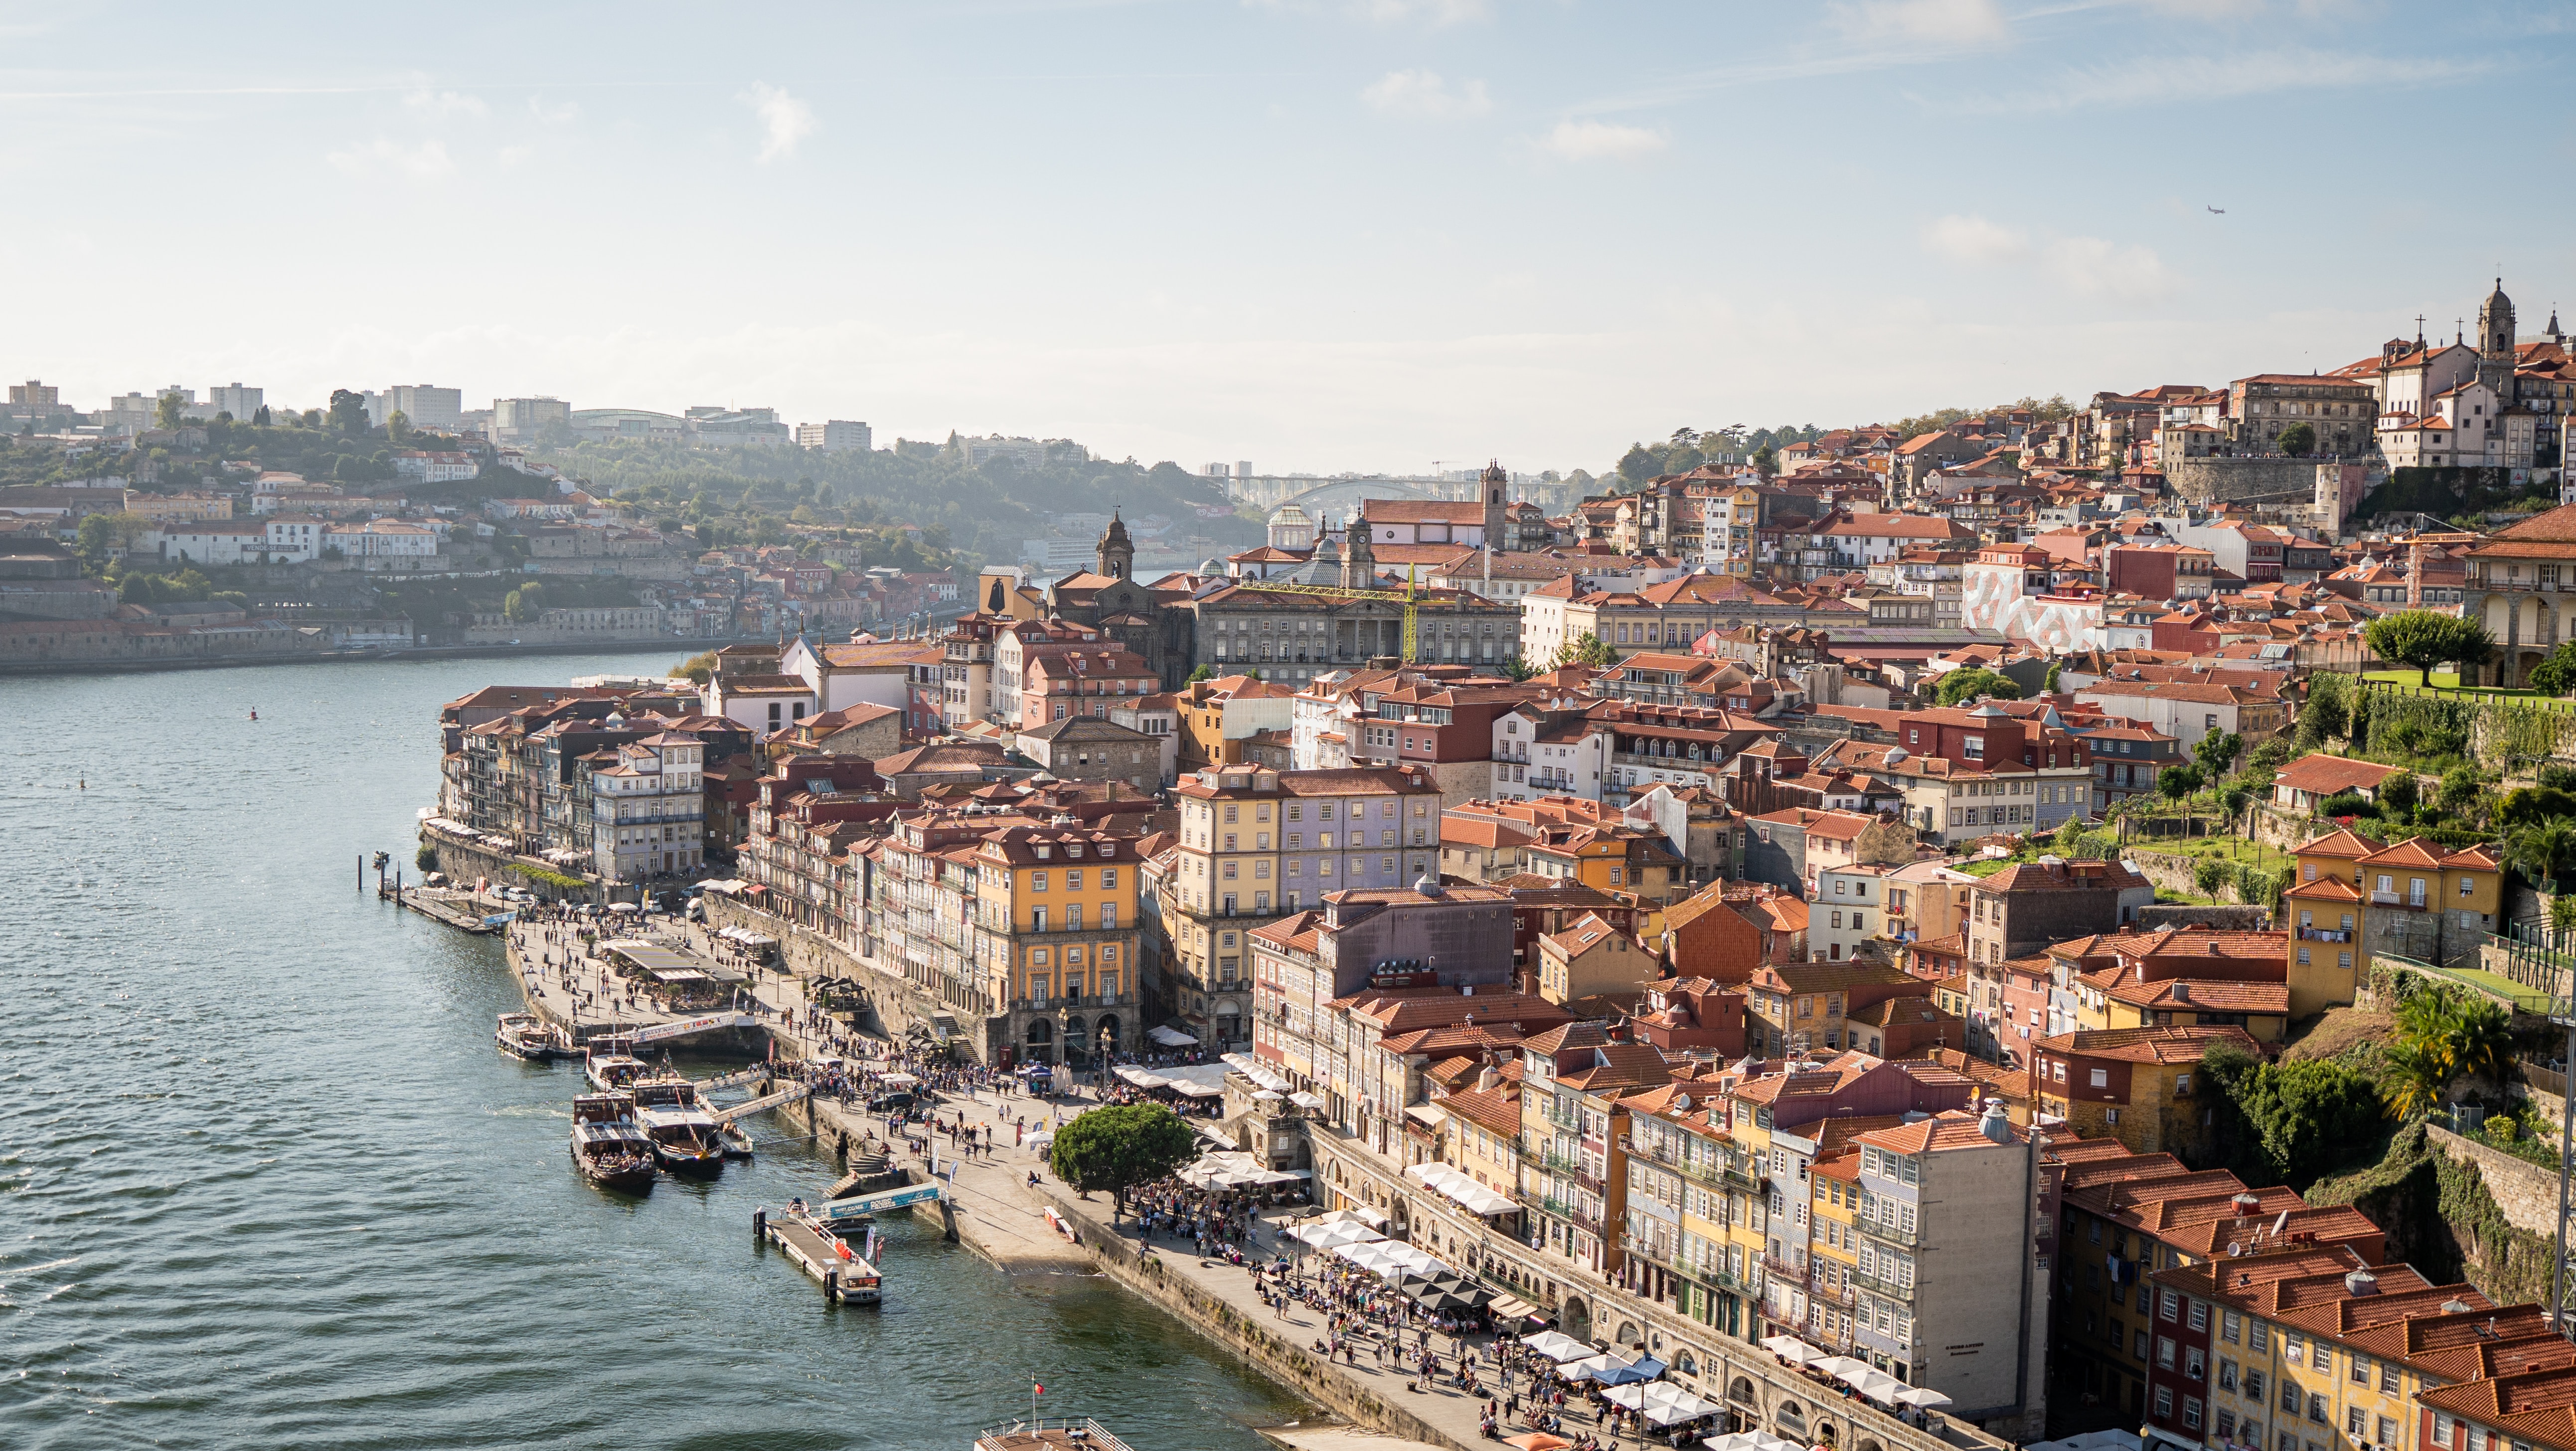 Porto and northern Portugal